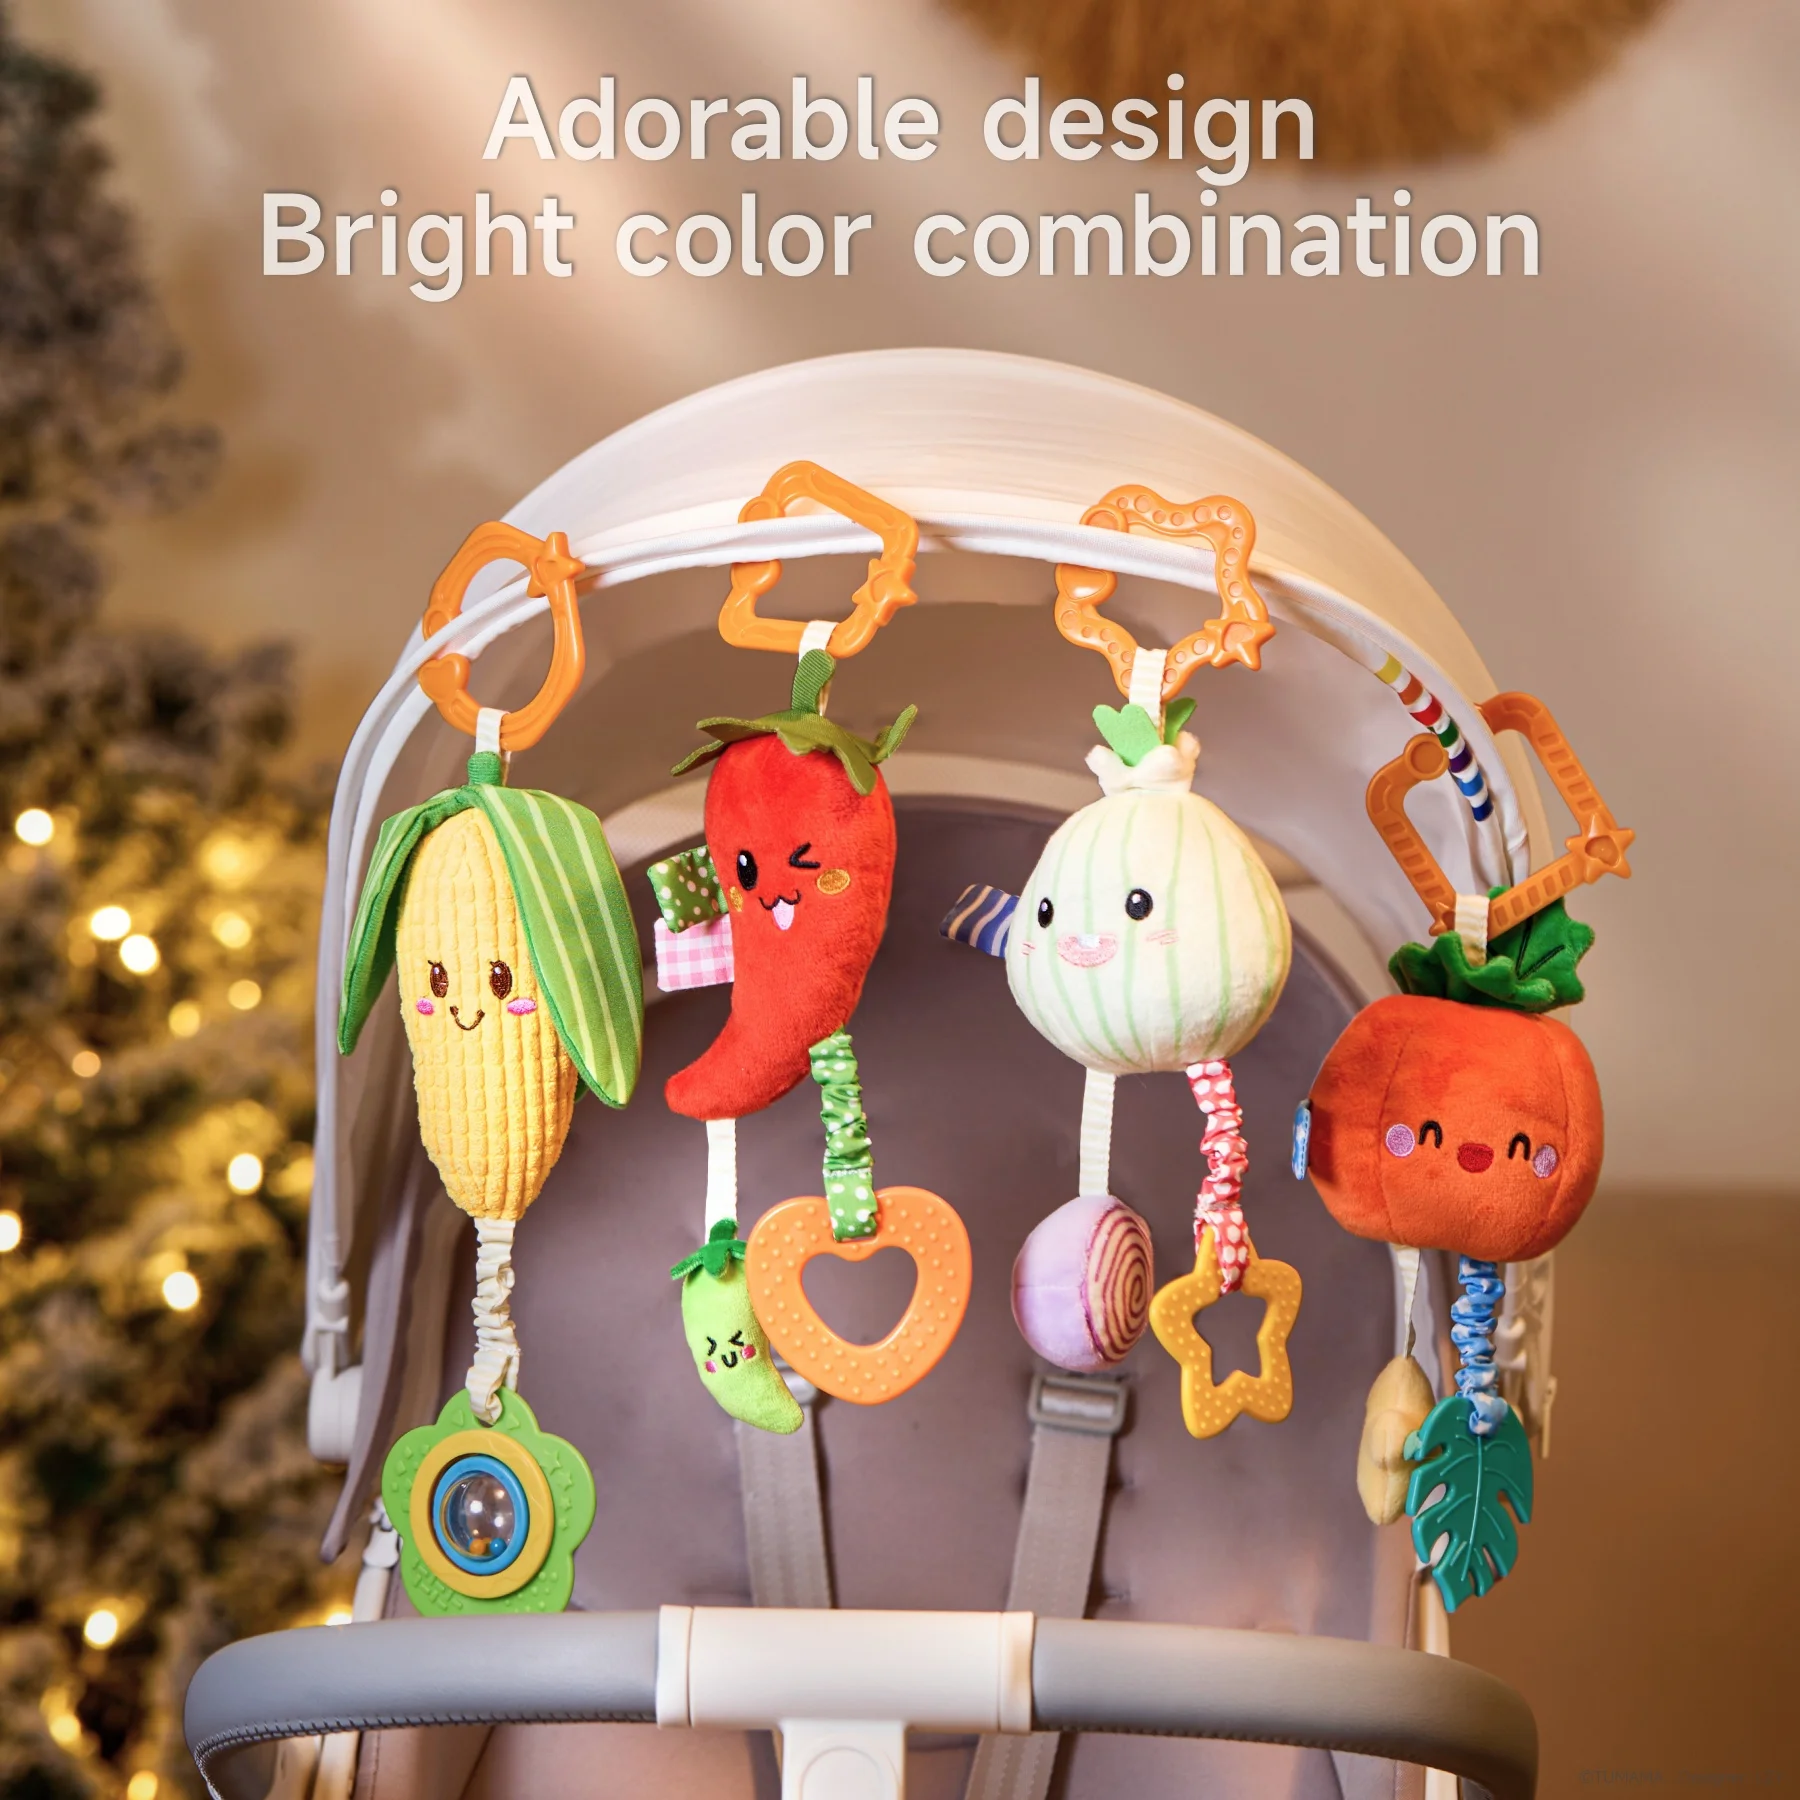 Tumama Kids Vegetables Hanging Rattle Set Plush Pendant Sensory Toy For Crib Soft Baby Soothing Hanging Rattle Stroller Toys